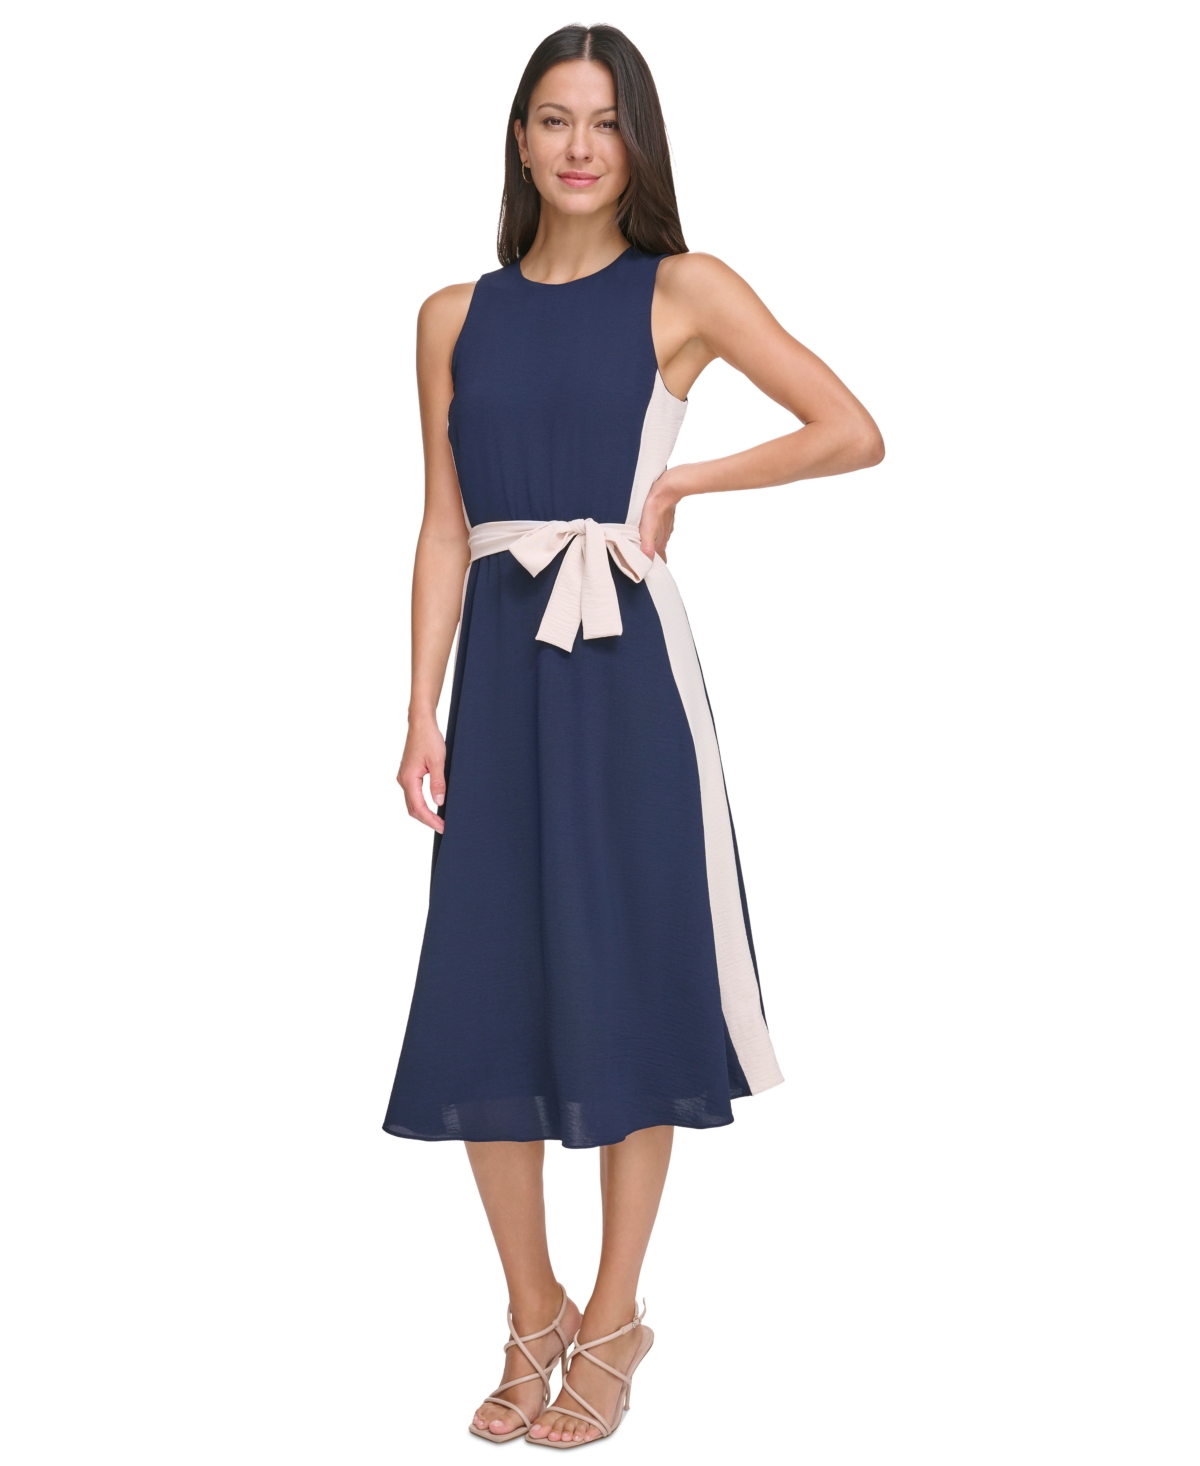 Women's Sleeveless Tie-Waist A-Line Dress - Navy/White